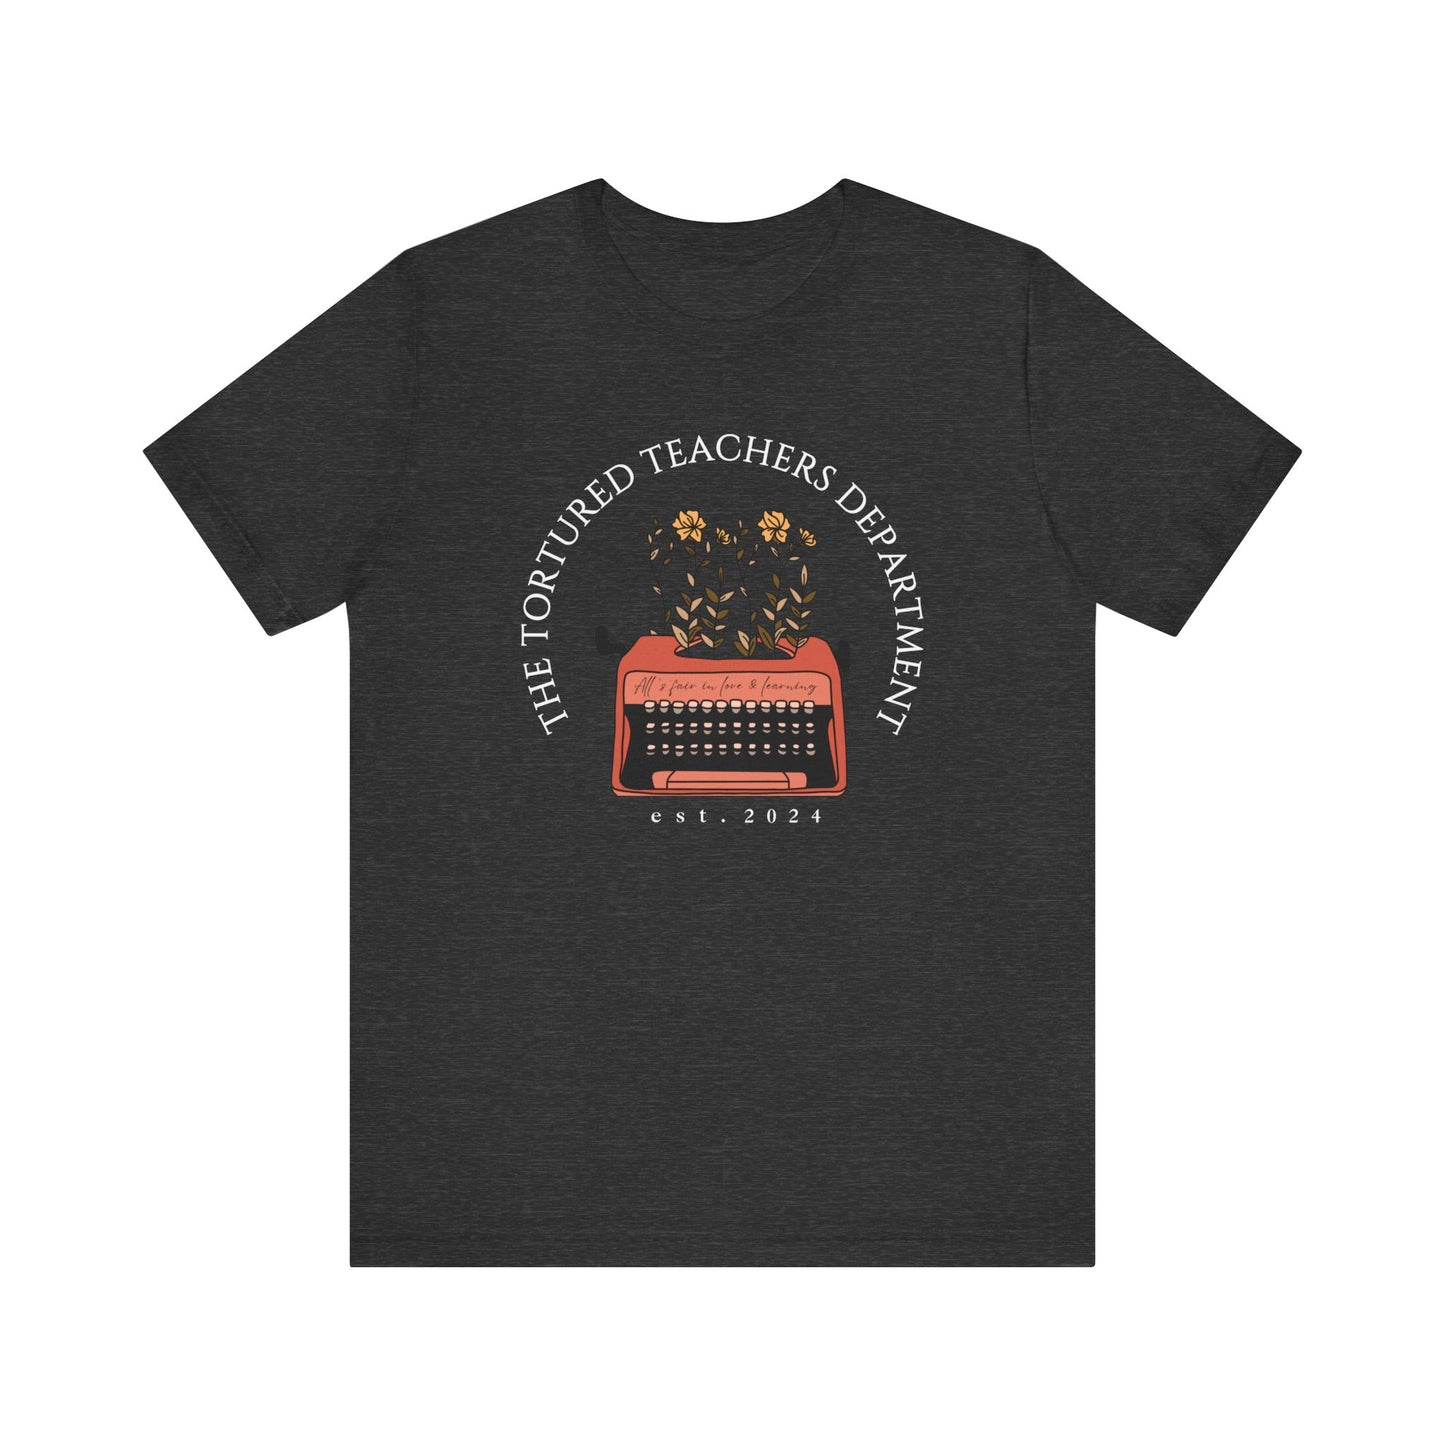 "The Tortured Teachers Department" Typewriter Teacher T-shirt